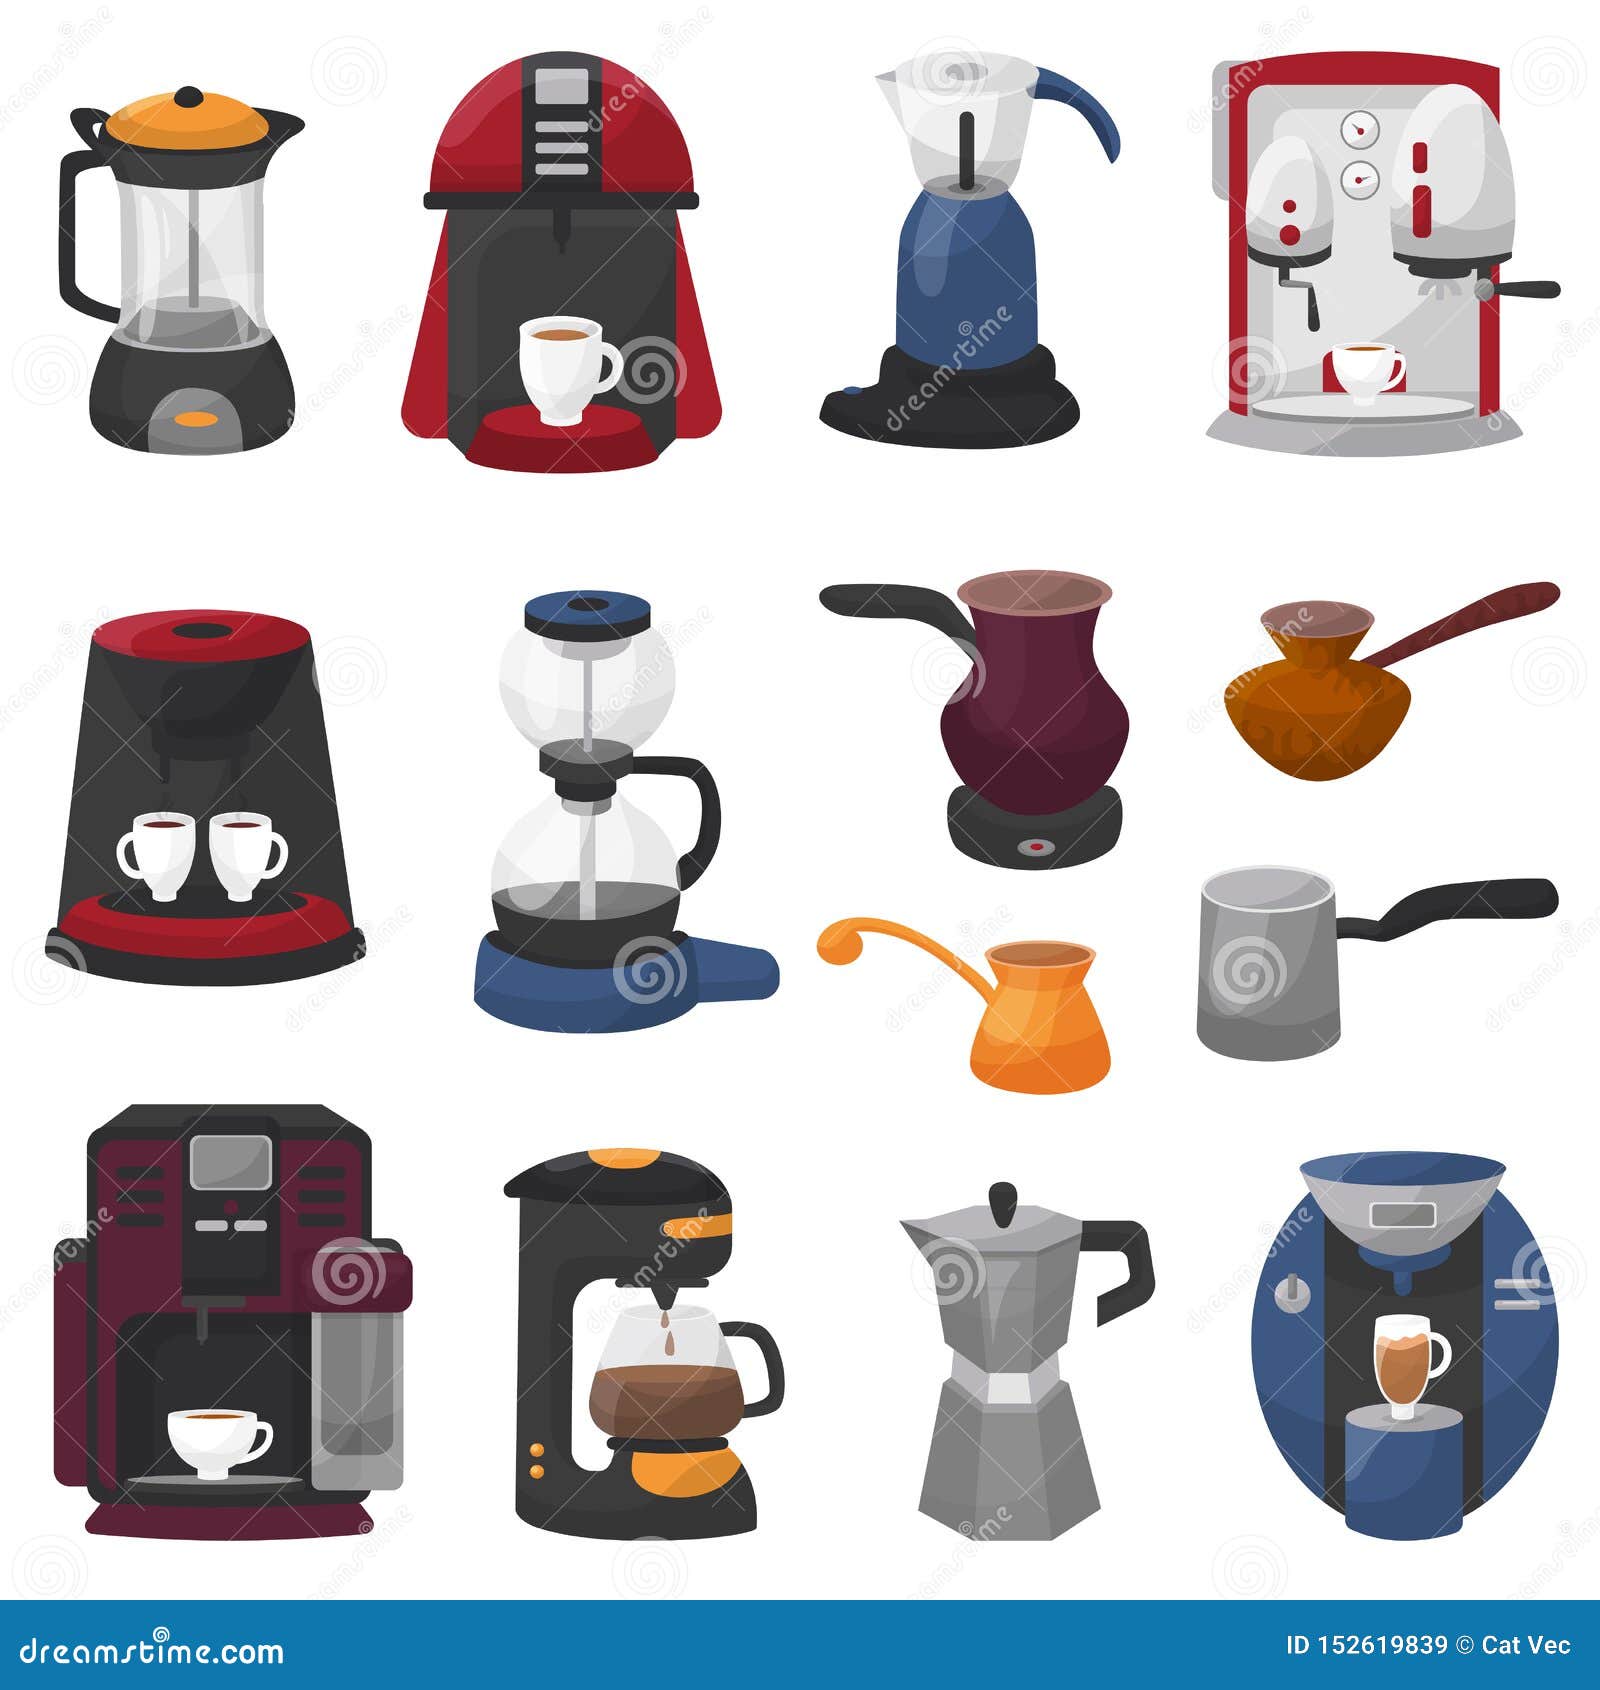 https://thumbs.dreamstime.com/z/coffee-machine-vector-coffeemaker-coffee-machine-espresso-drink-caffeine-cafe-illustration-set-professional-152619839.jpg